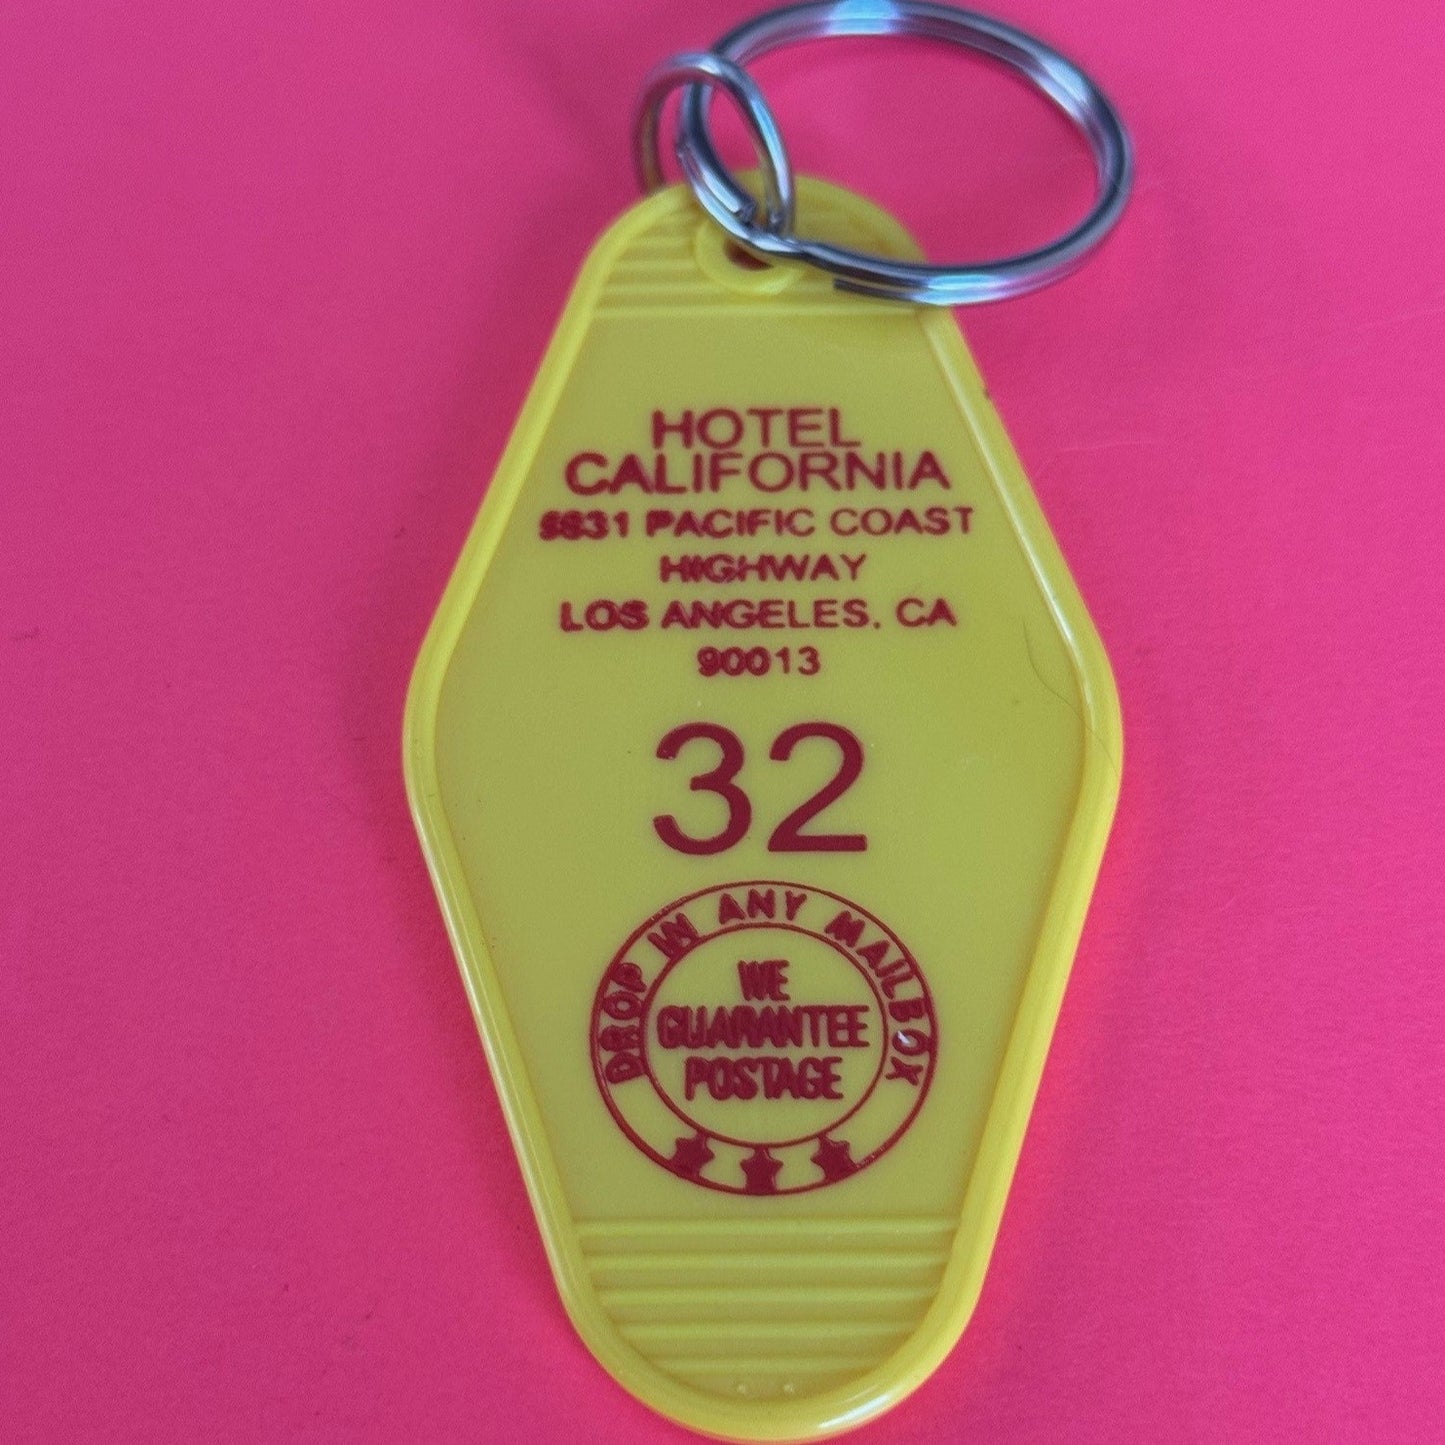 yellow key fob with hotel California address